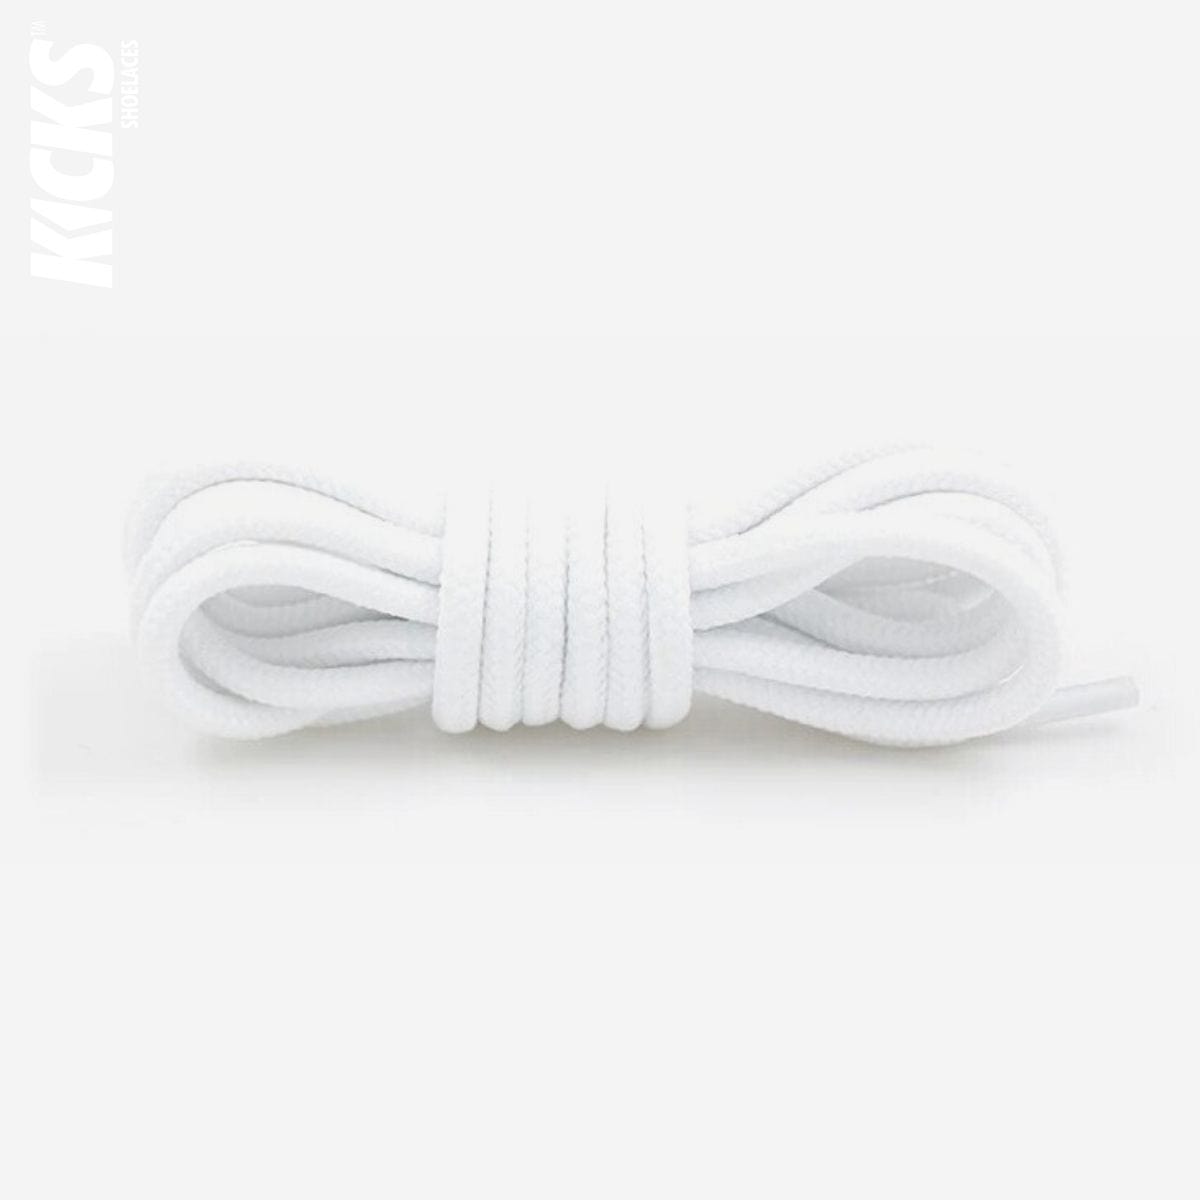 Air Max 97 Replacement Shoelaces - Kicks Shoelaces